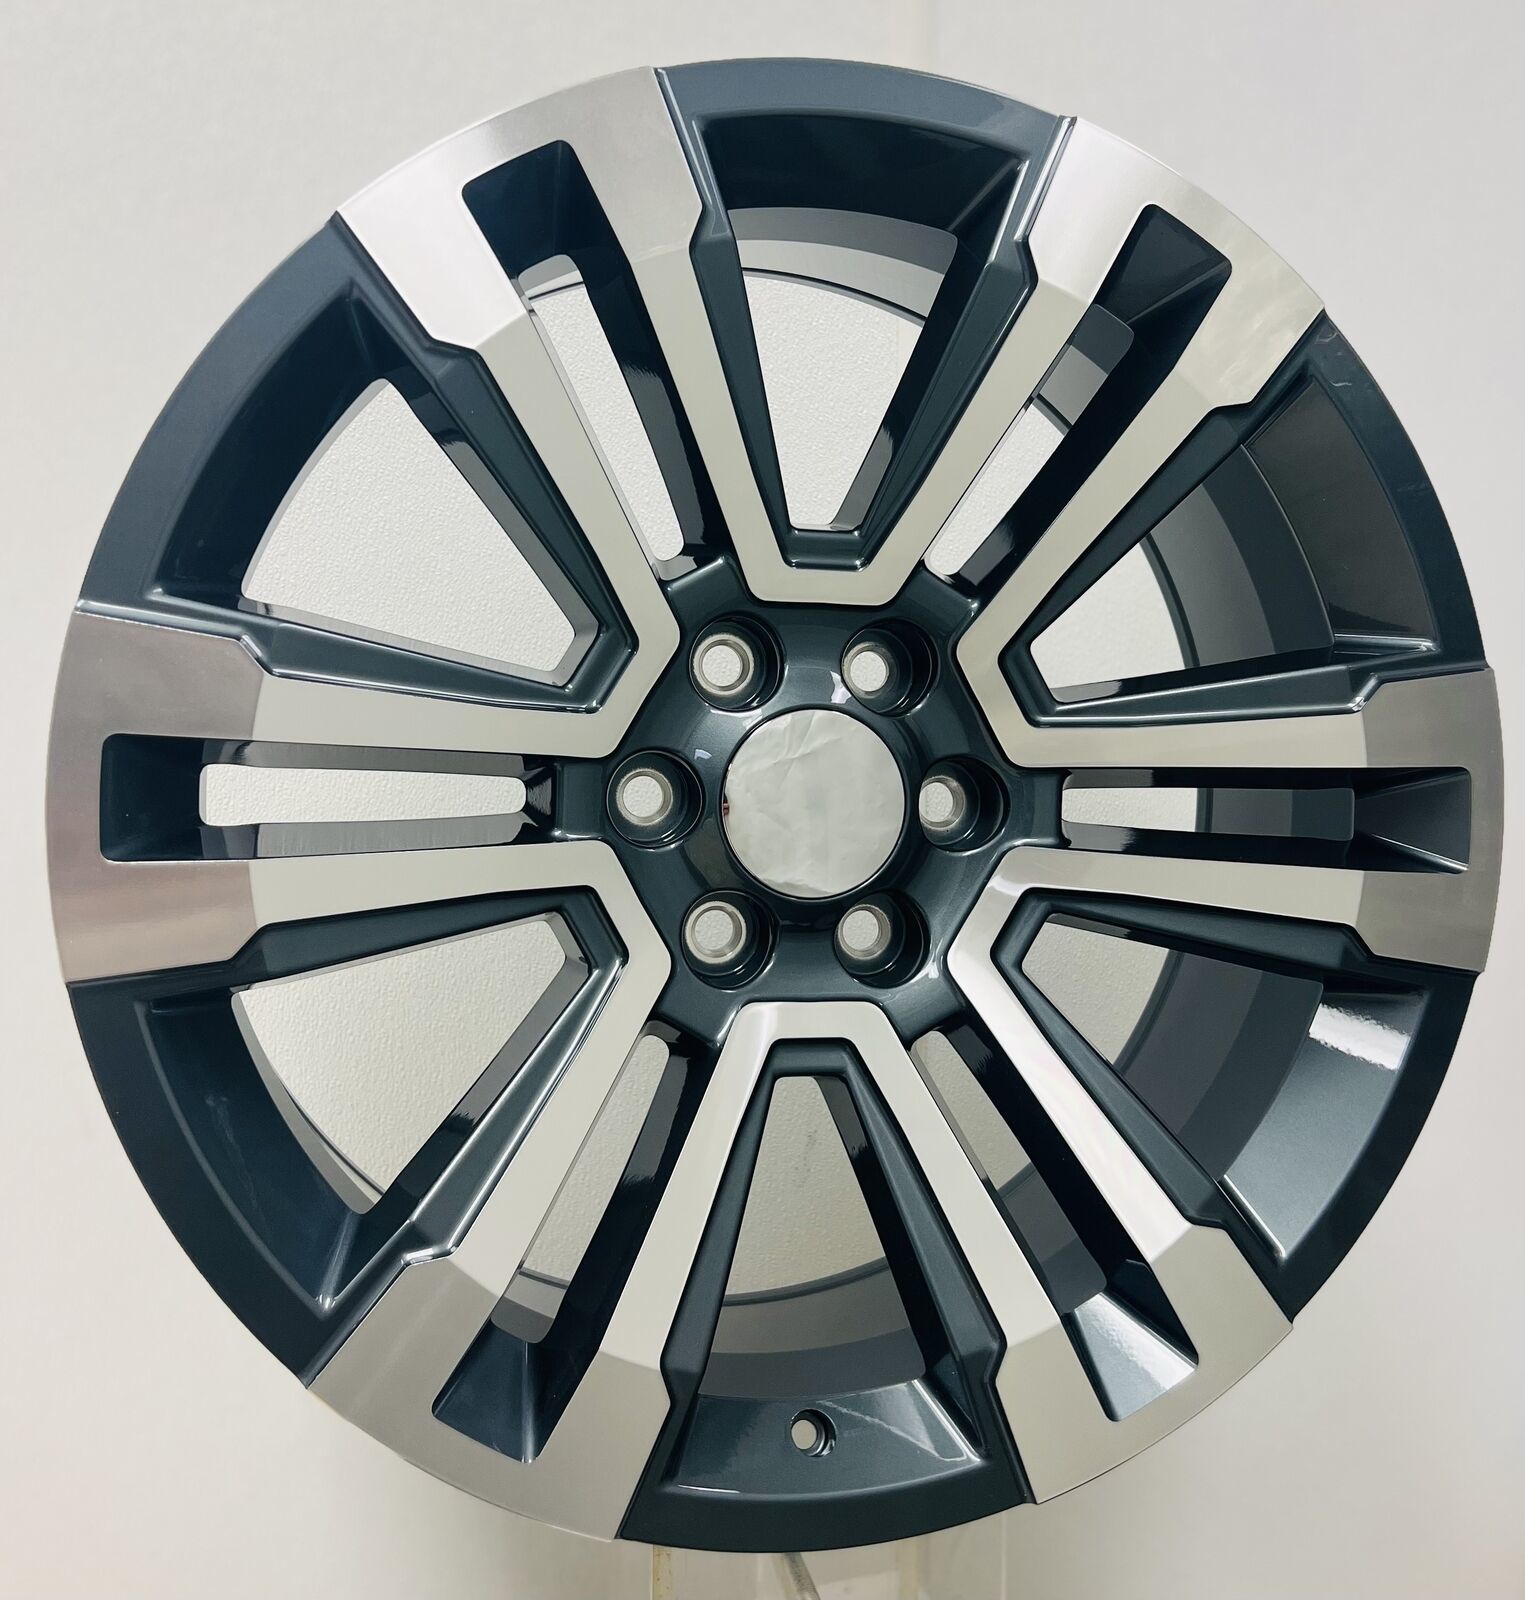 Primary image for Chevy 22" Gunmetal And Machine Denali Style Split Spoke Wheels Silverado Tahoe 